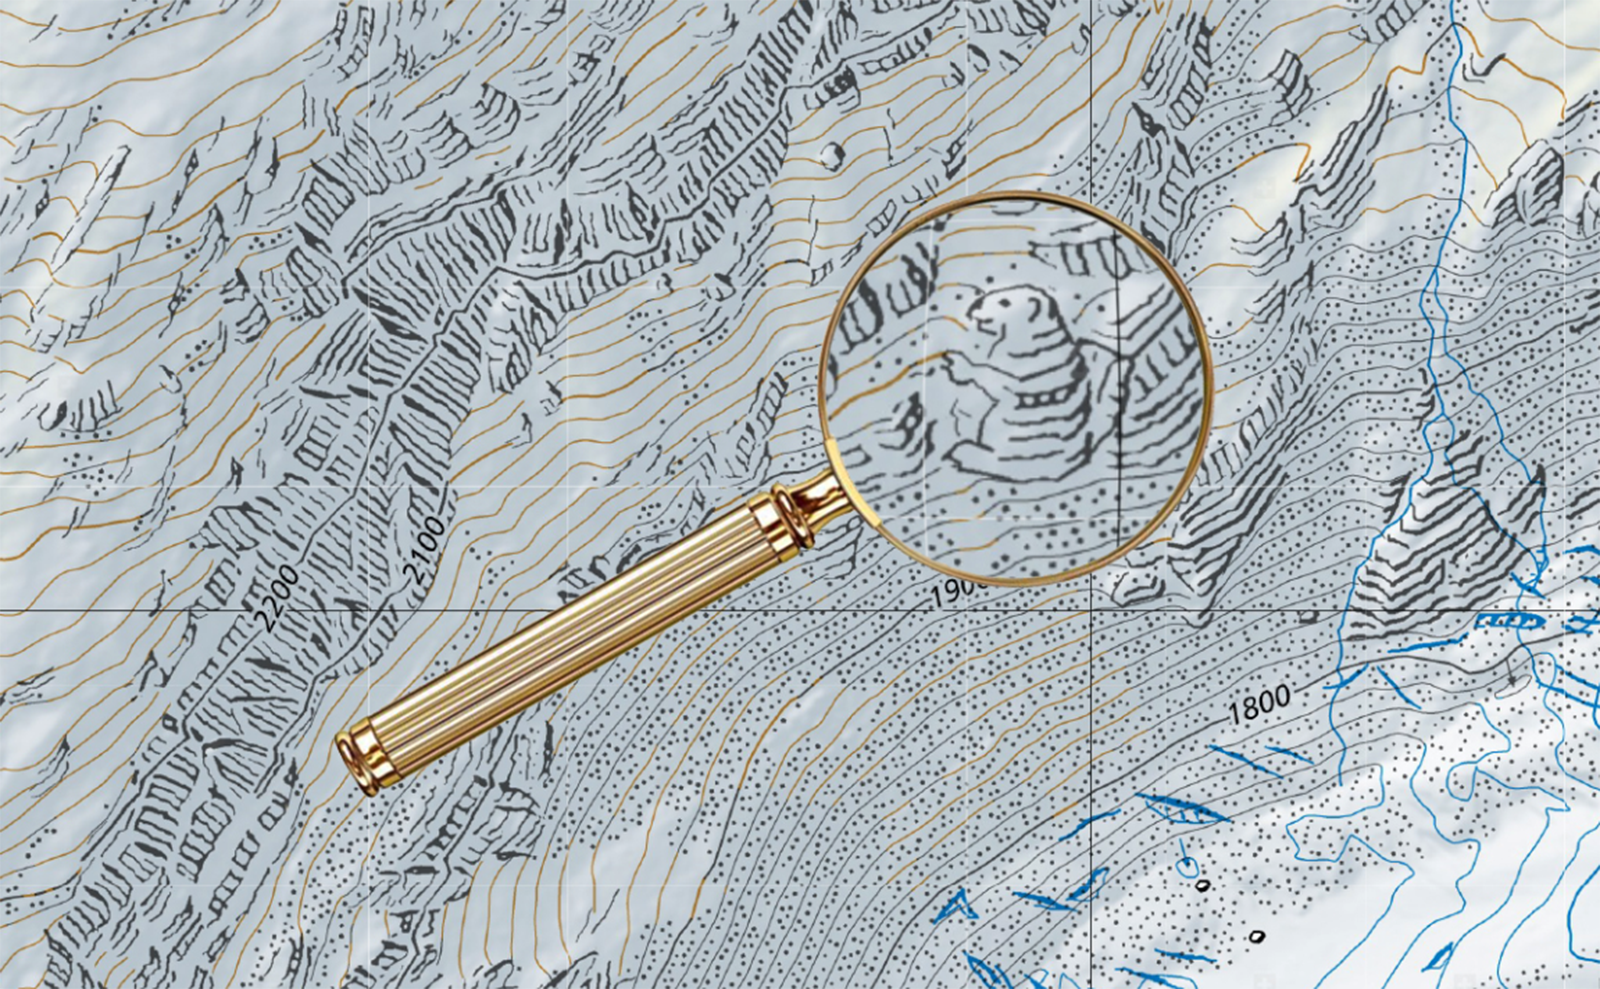 marmot drawing hidden in a map